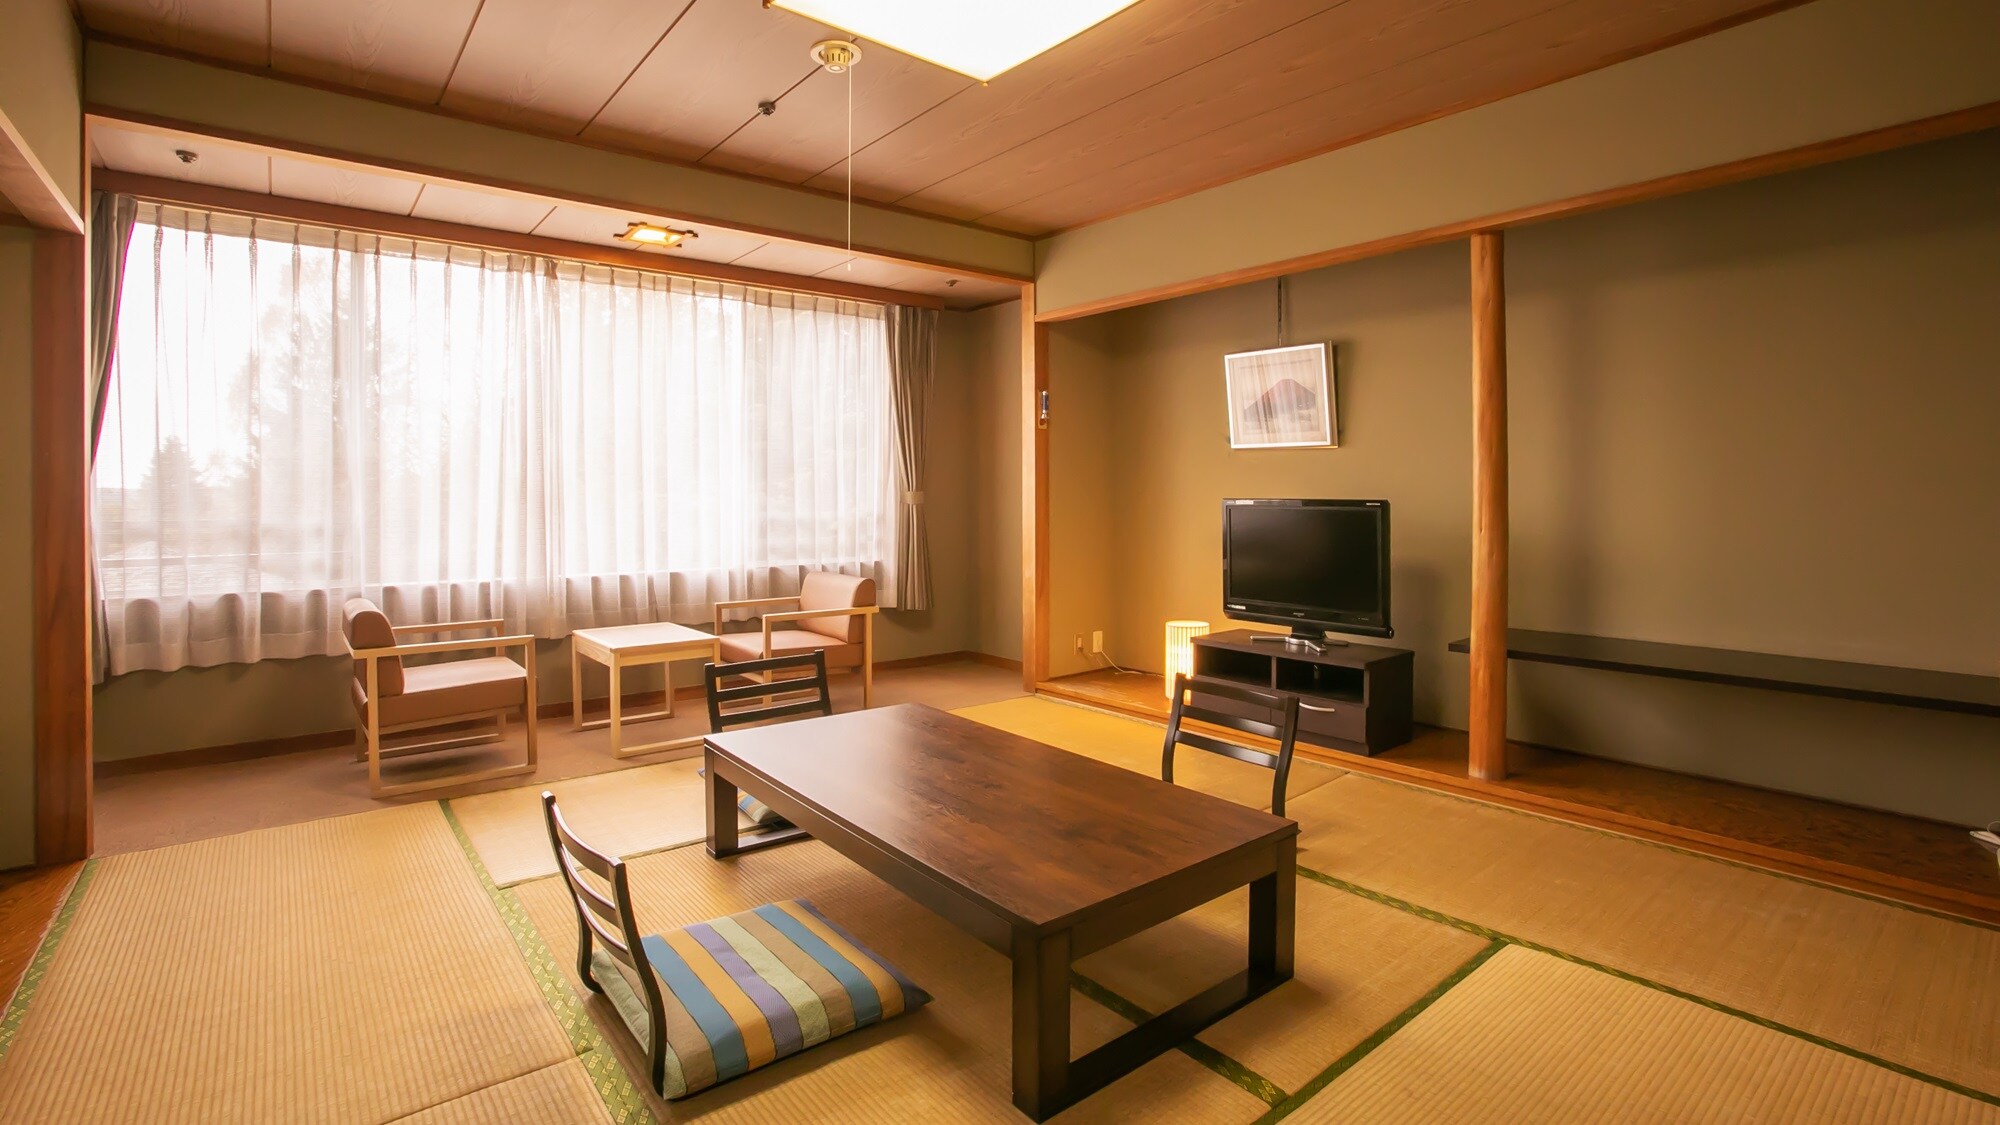 ■ Japanese-style room 8 tatami mats